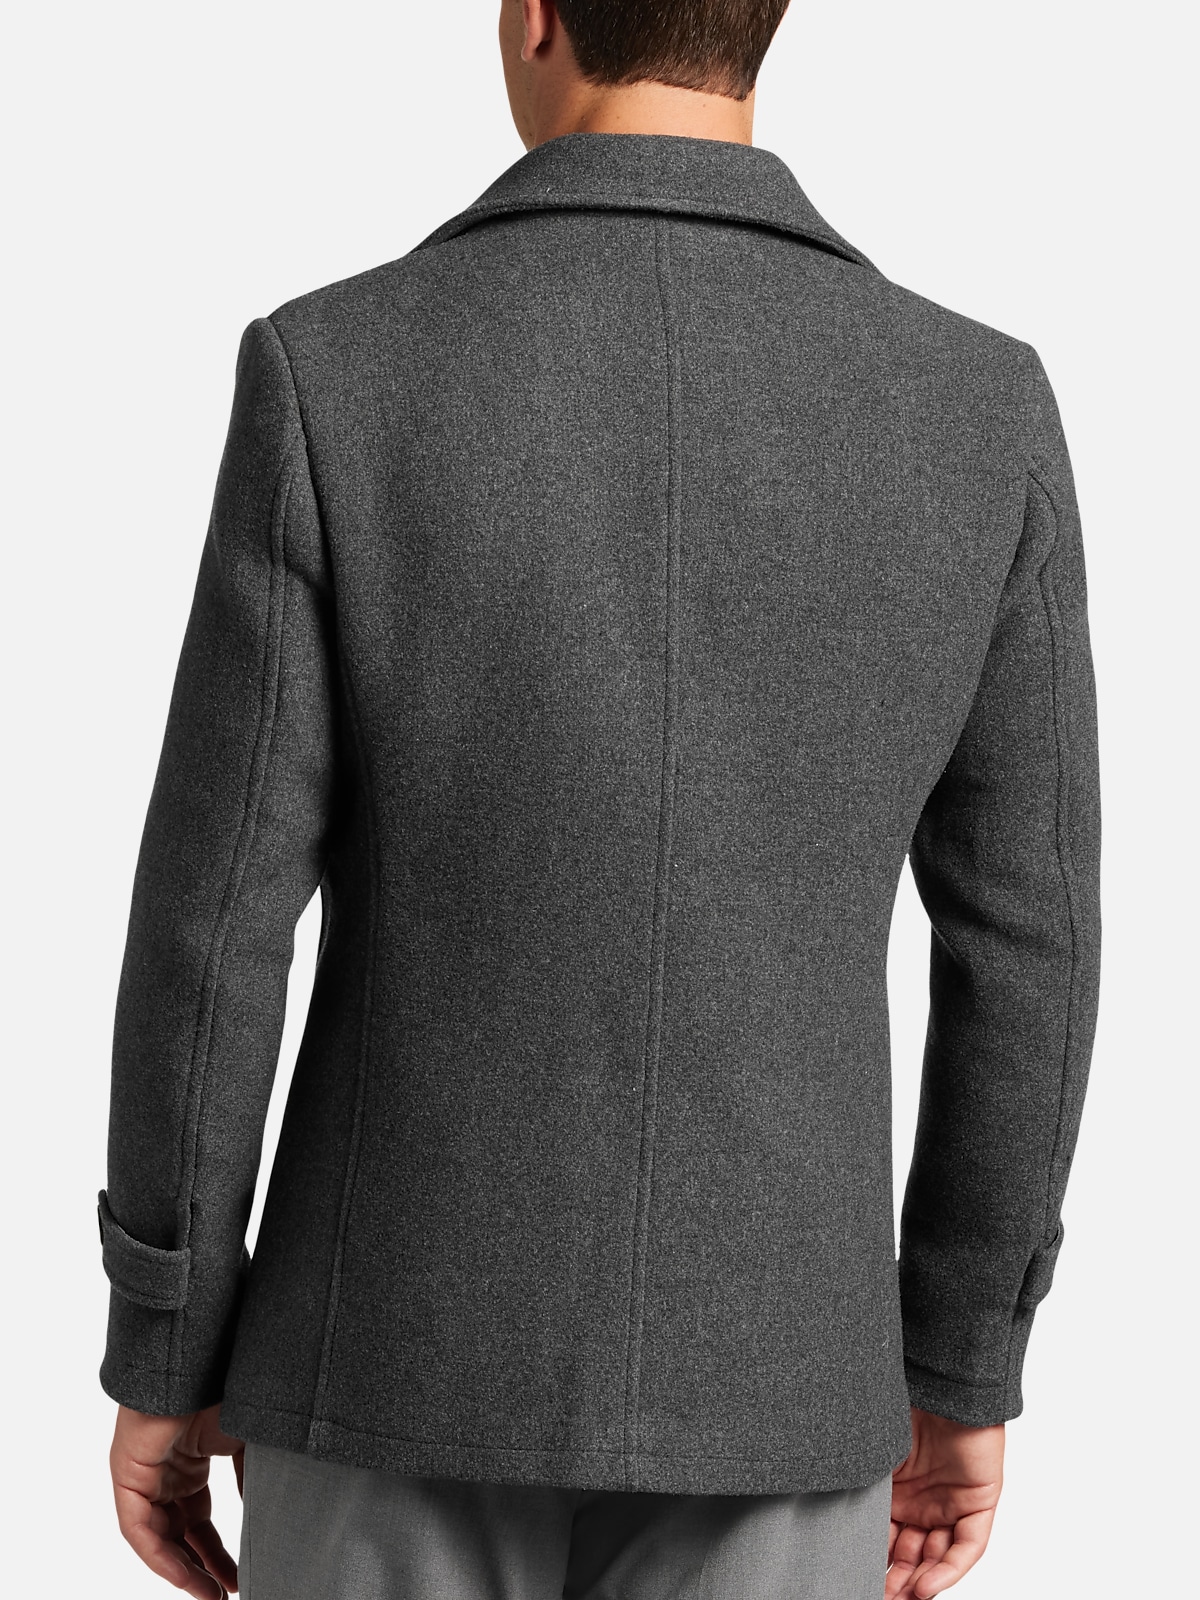 Michael Kors Classic Fit Topcoat | All Sale| Men's Wearhouse